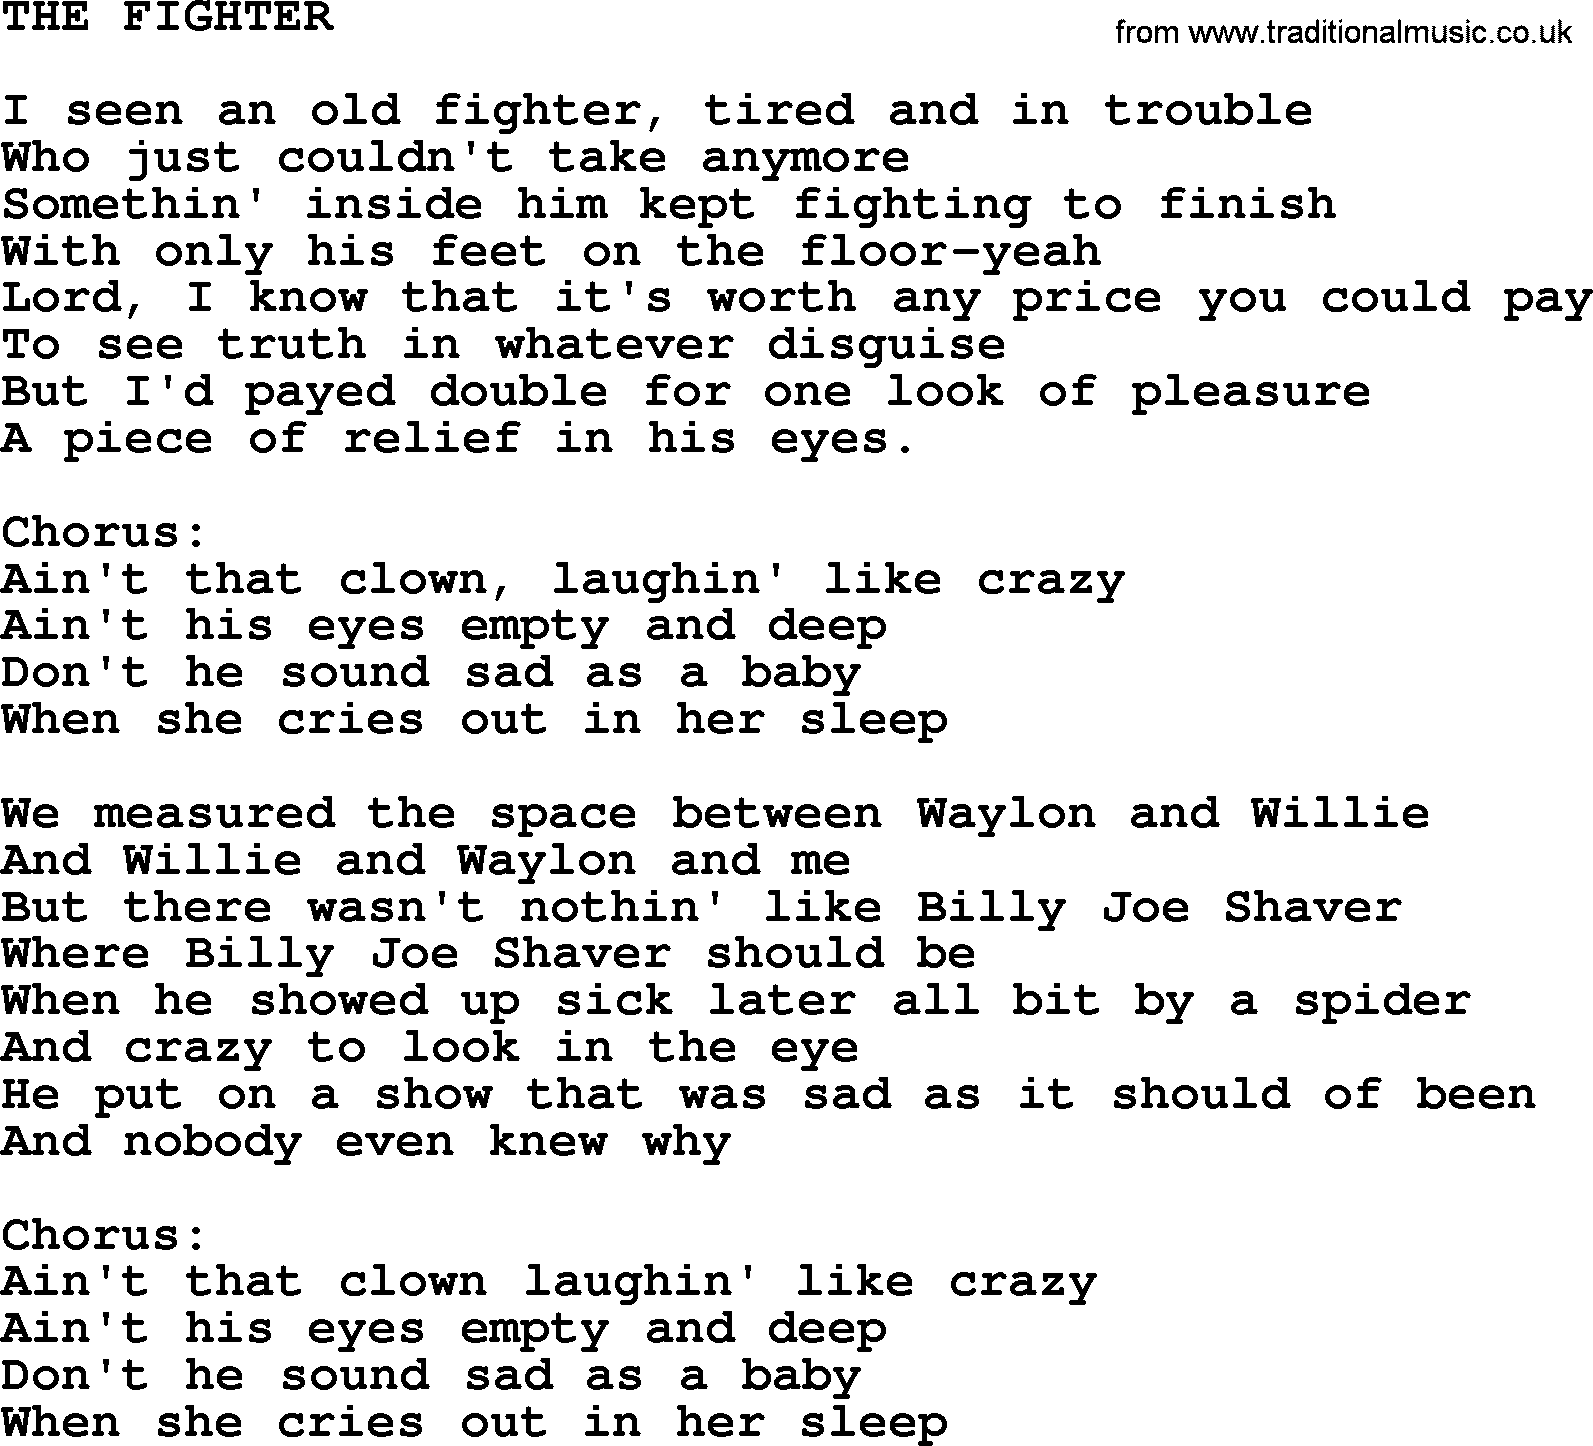 Kris Kristofferson song: The Fighter lyrics